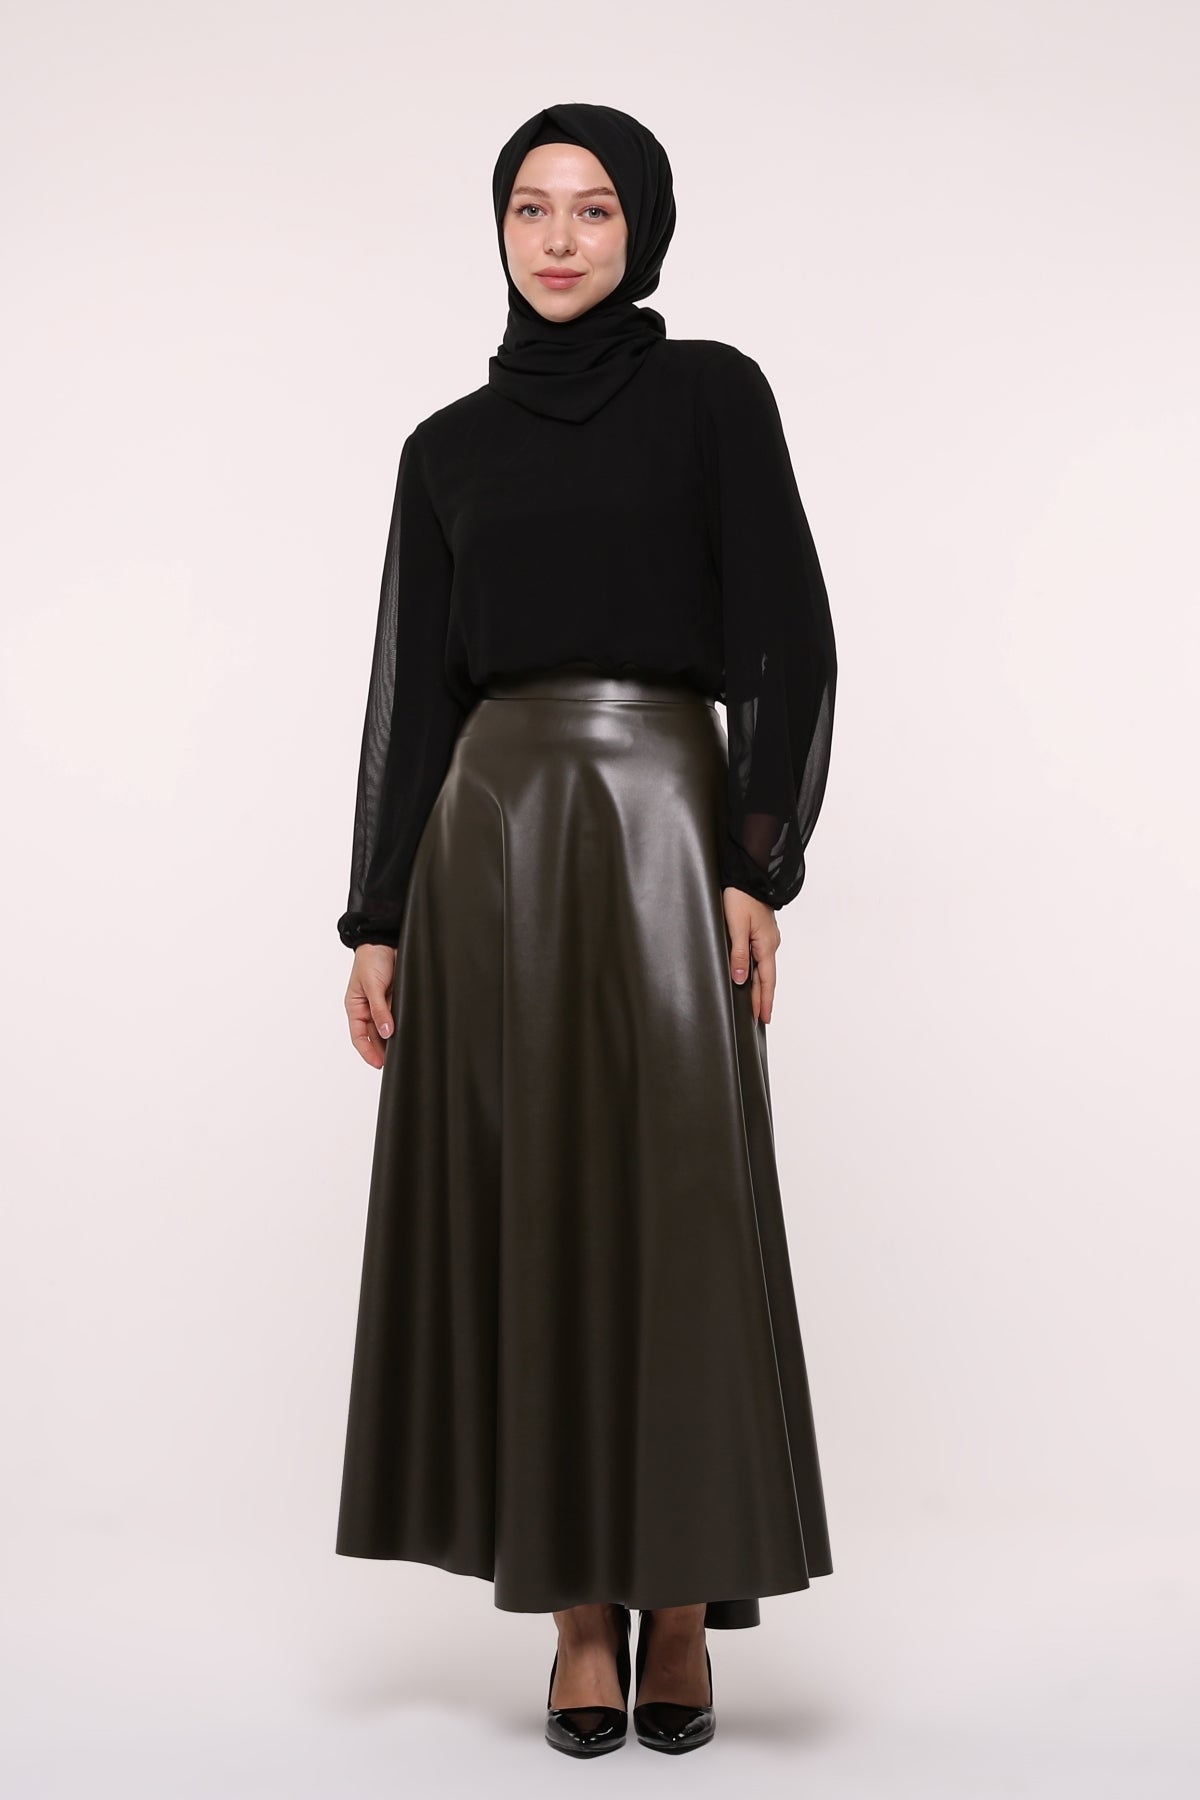 Leather skirt - ETK002- Olive